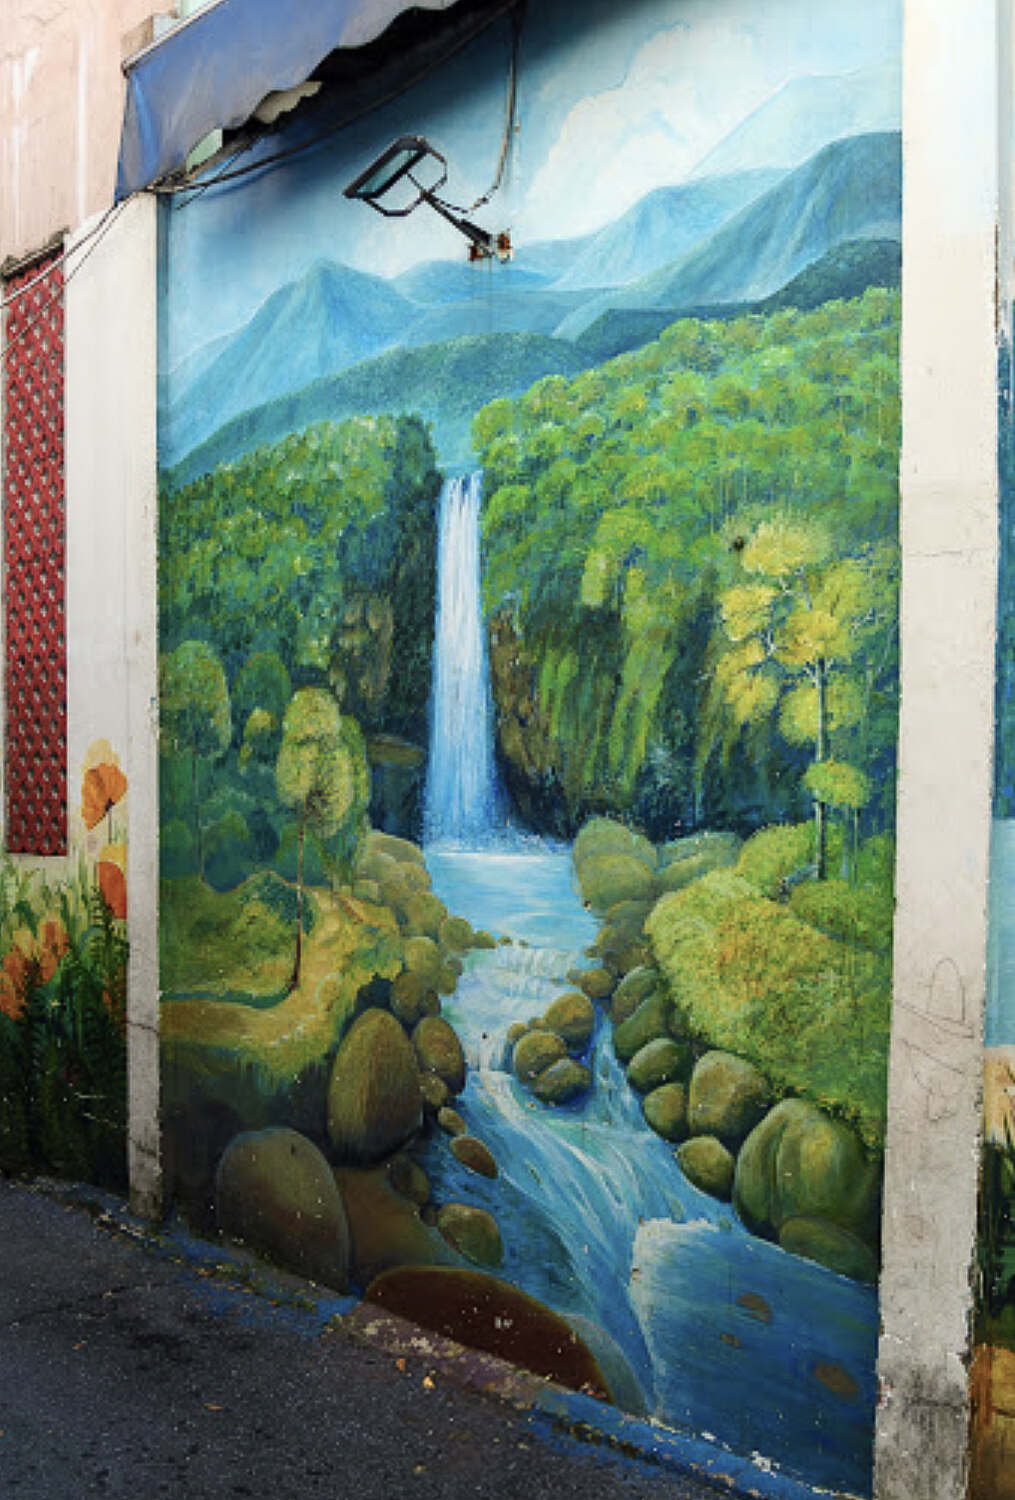 Waterfall and jungle graffiti at Da Nang Fresco Village